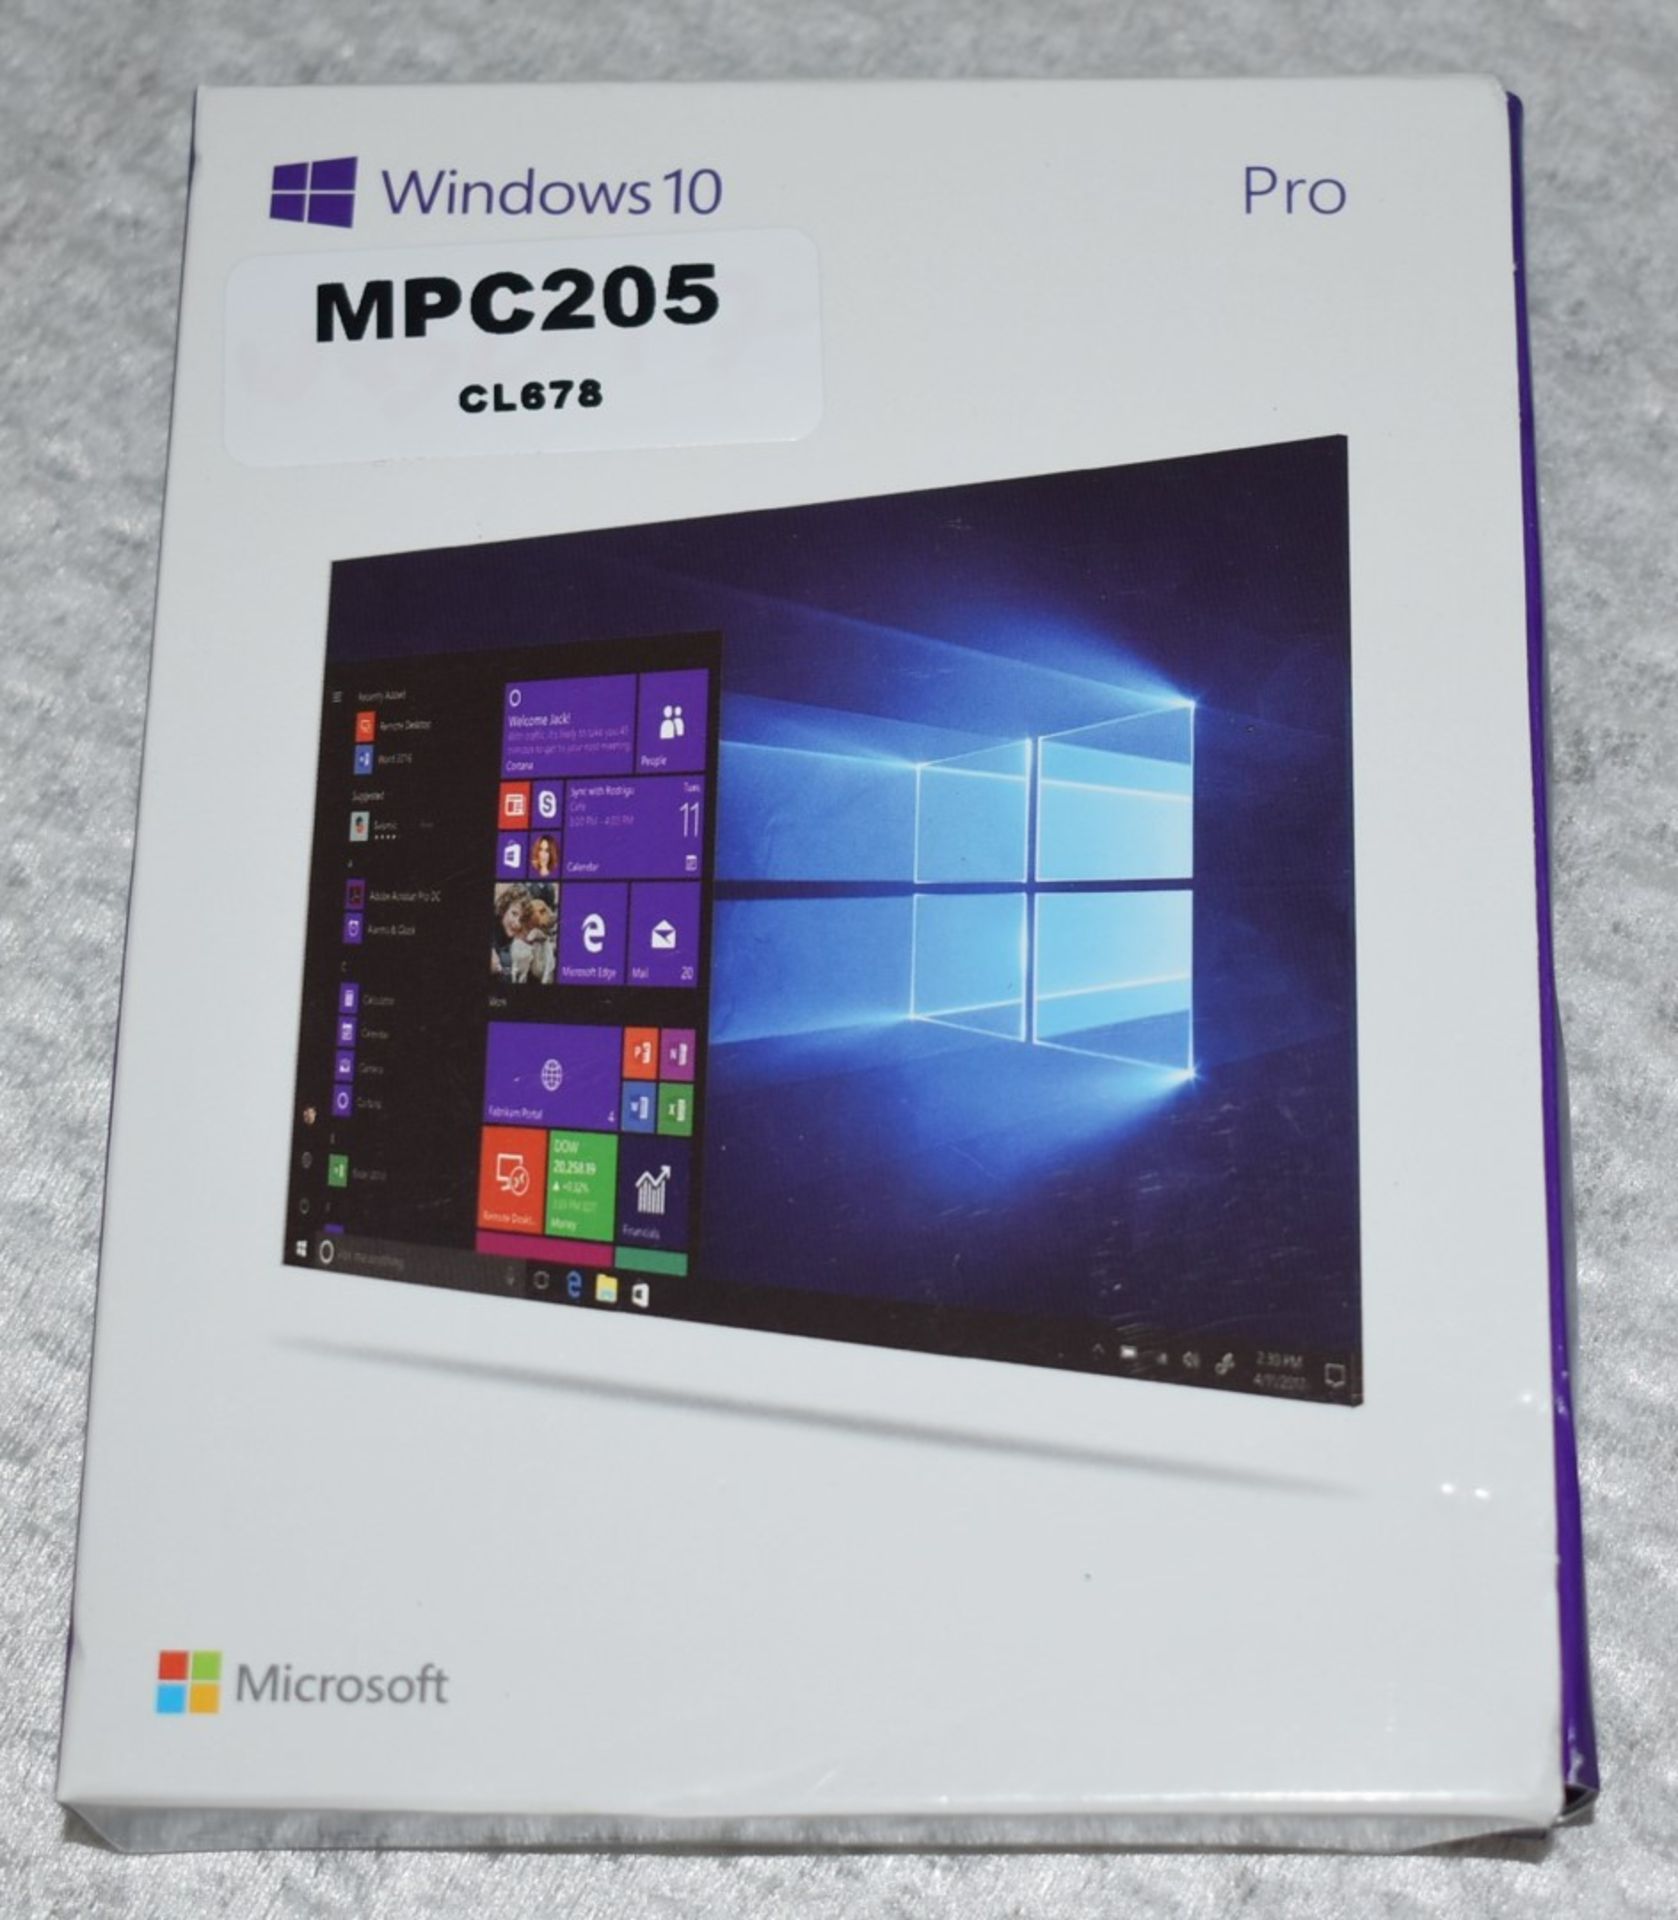 1 x Microsoft Windows 10 Pro Activation Key Card With Original Box - Ref: MPC205 P1 - CL678 -